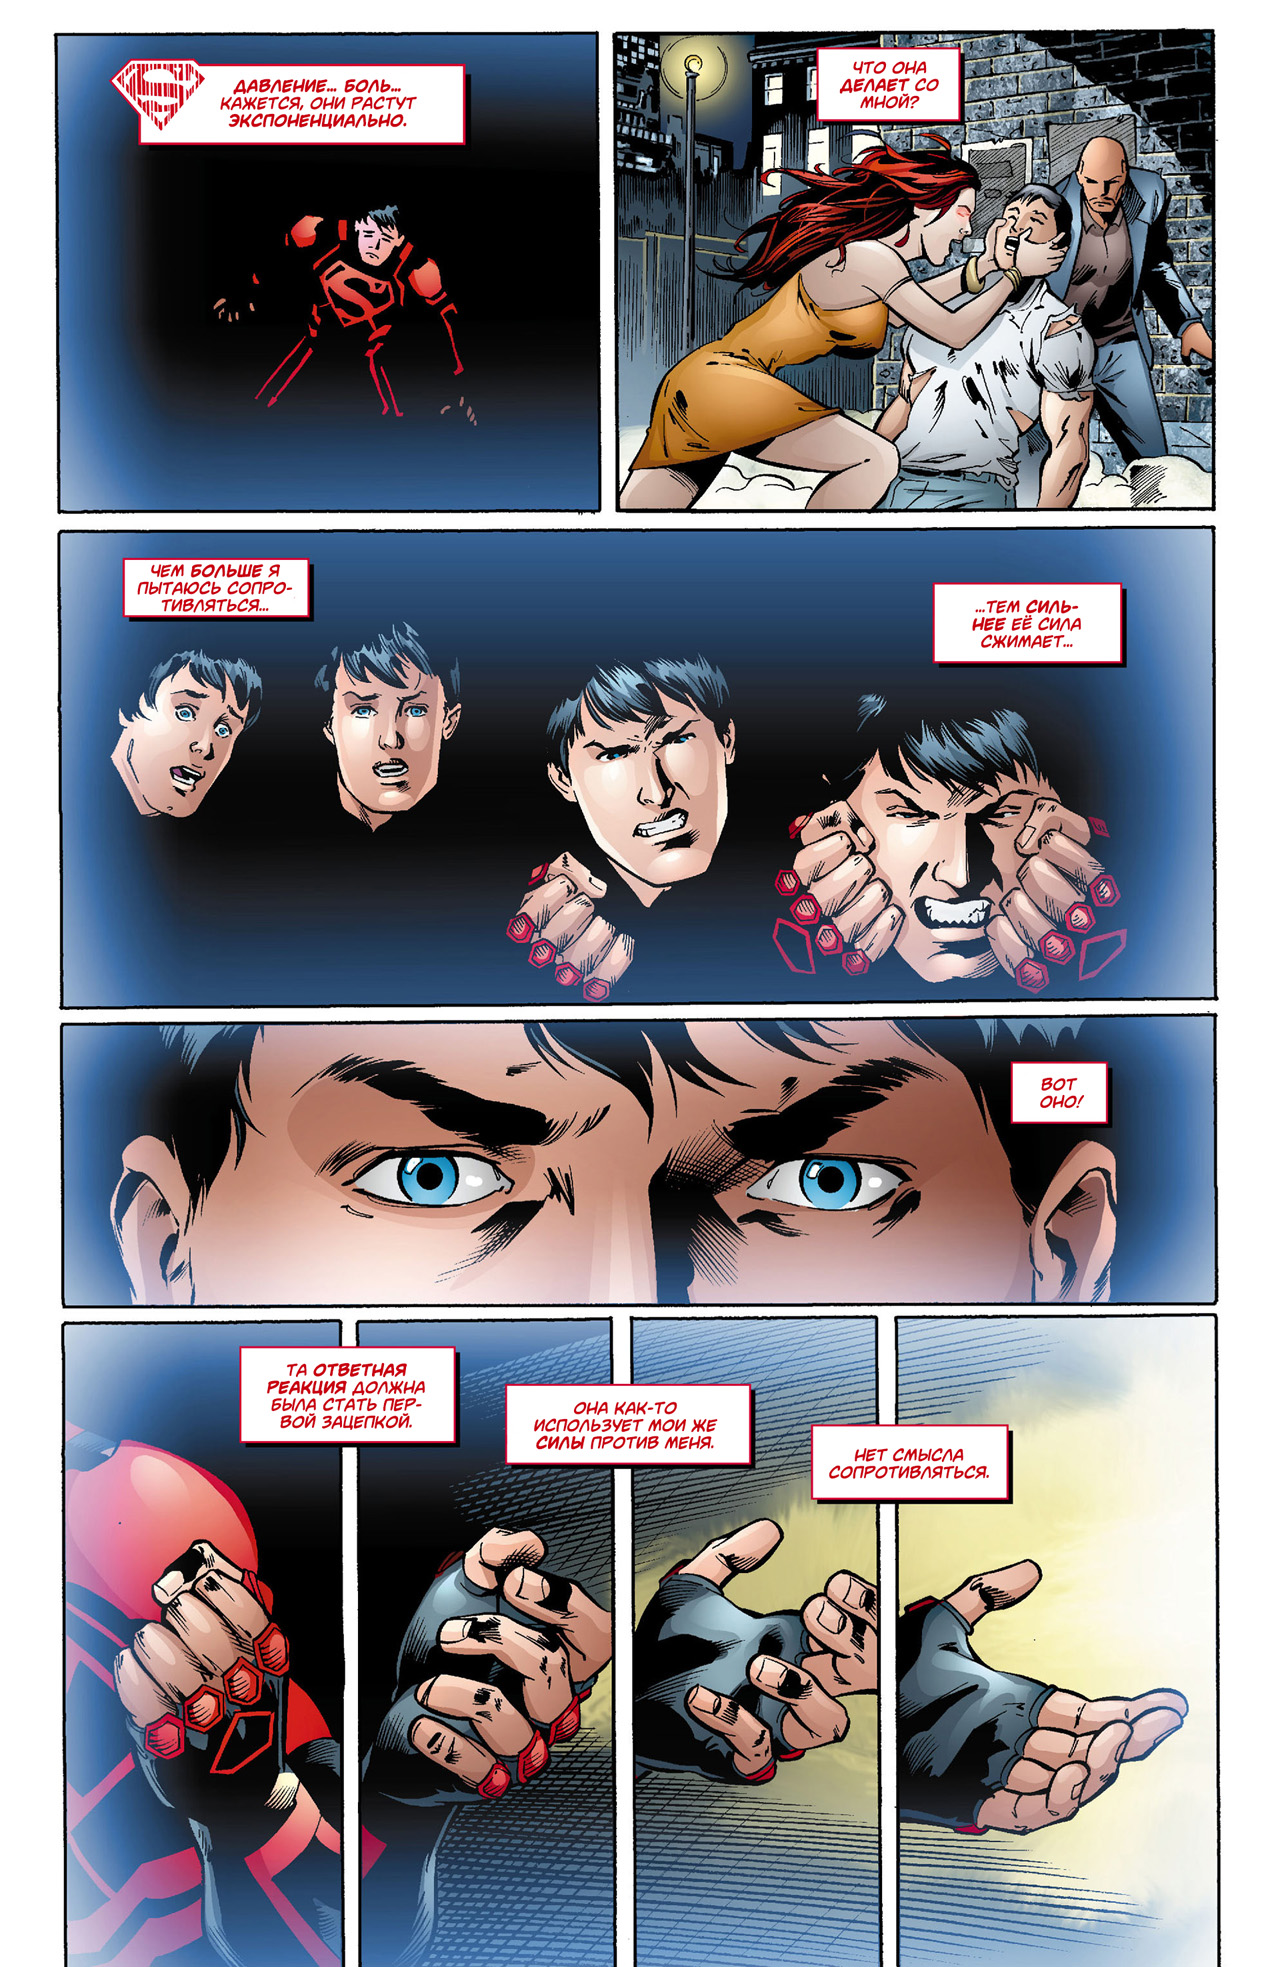 Superboy-12-pg-015.jpg